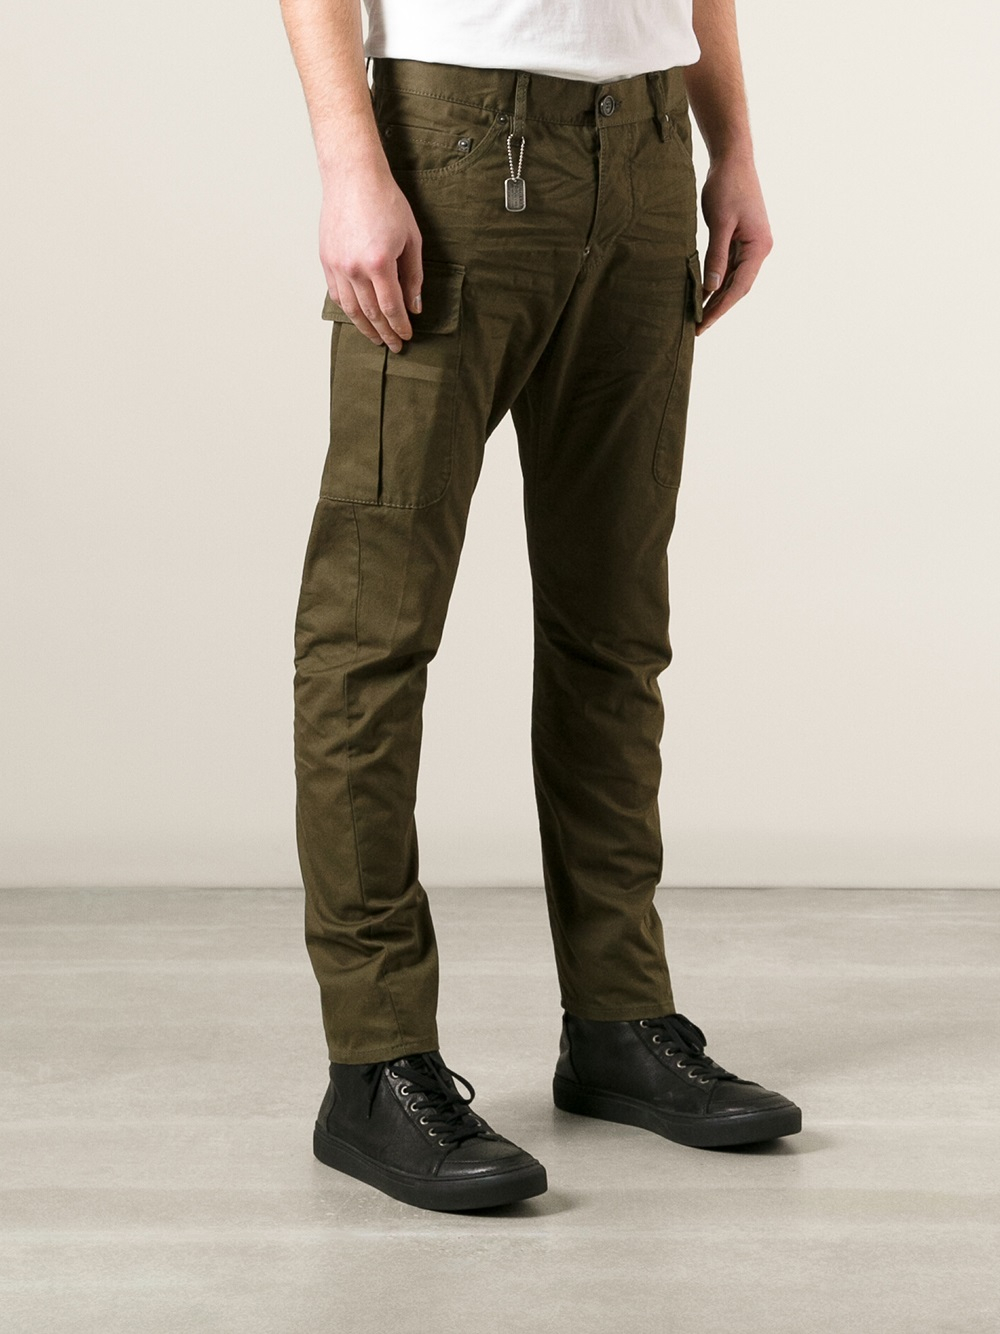 Lyst - Dsquared² Cargo Trouser in Green for Men